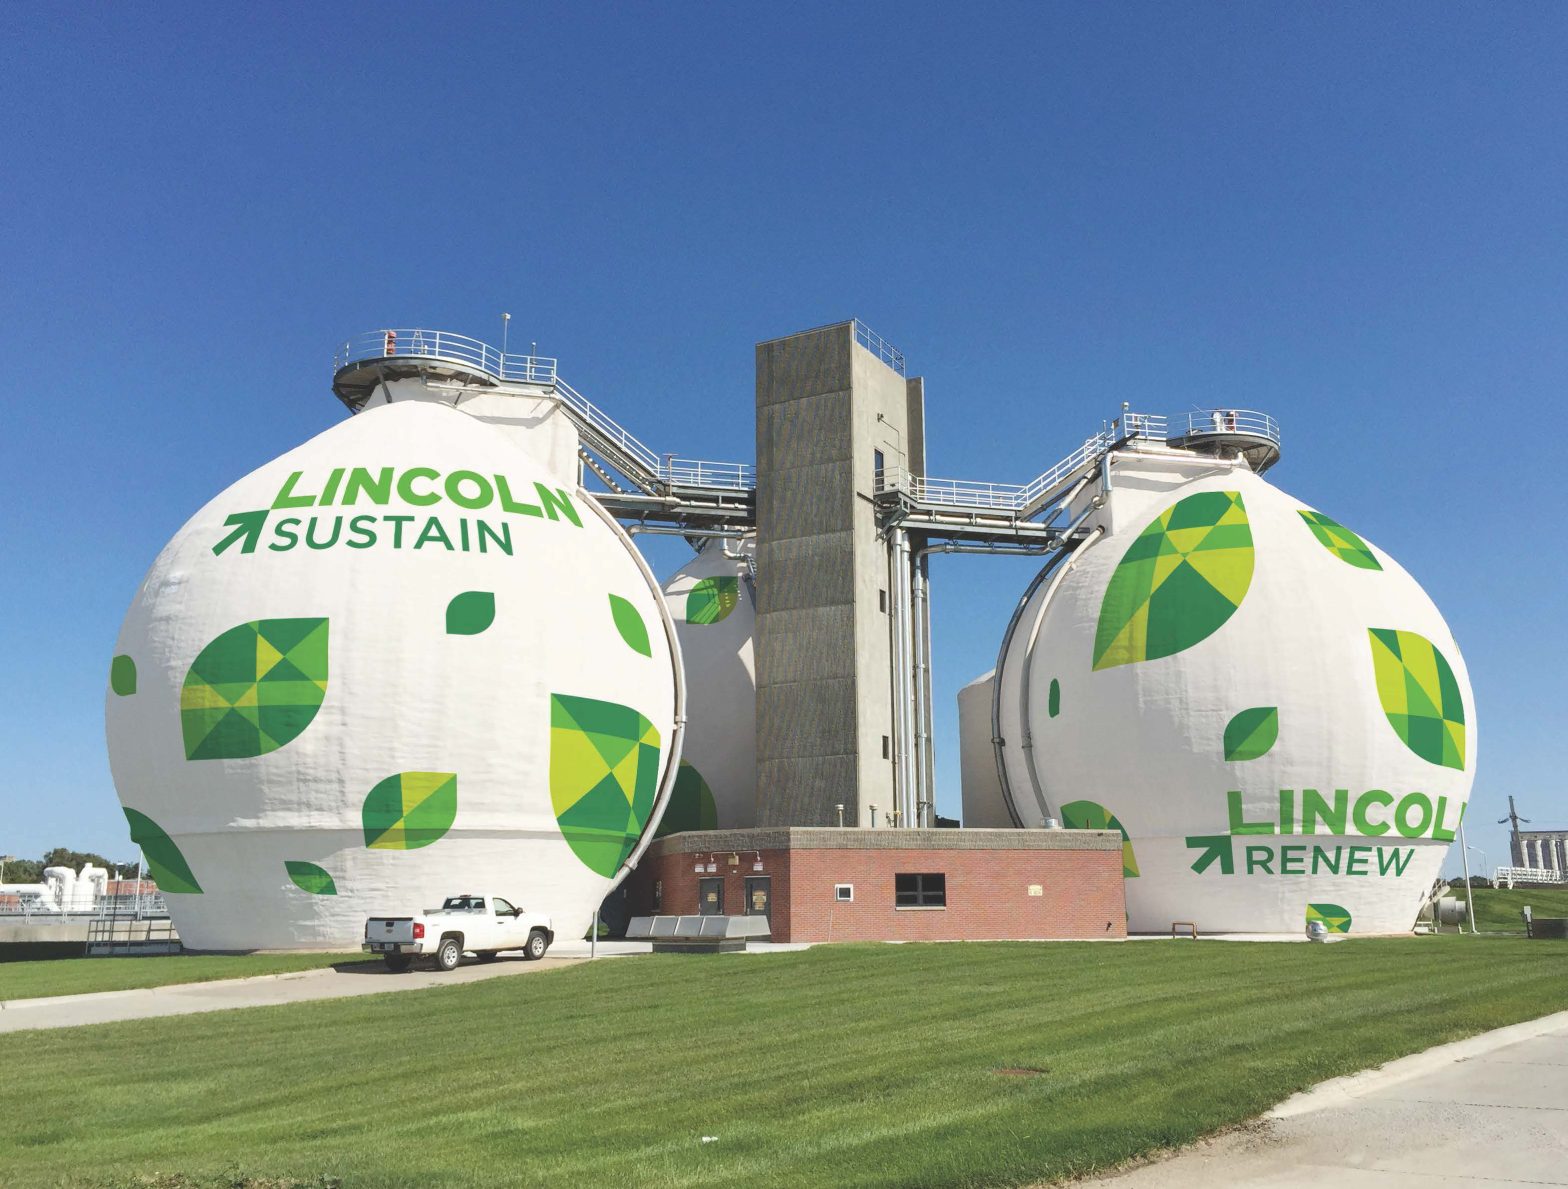 Lincoln, Nebraska: Sustainable Pioneer on the Prairie